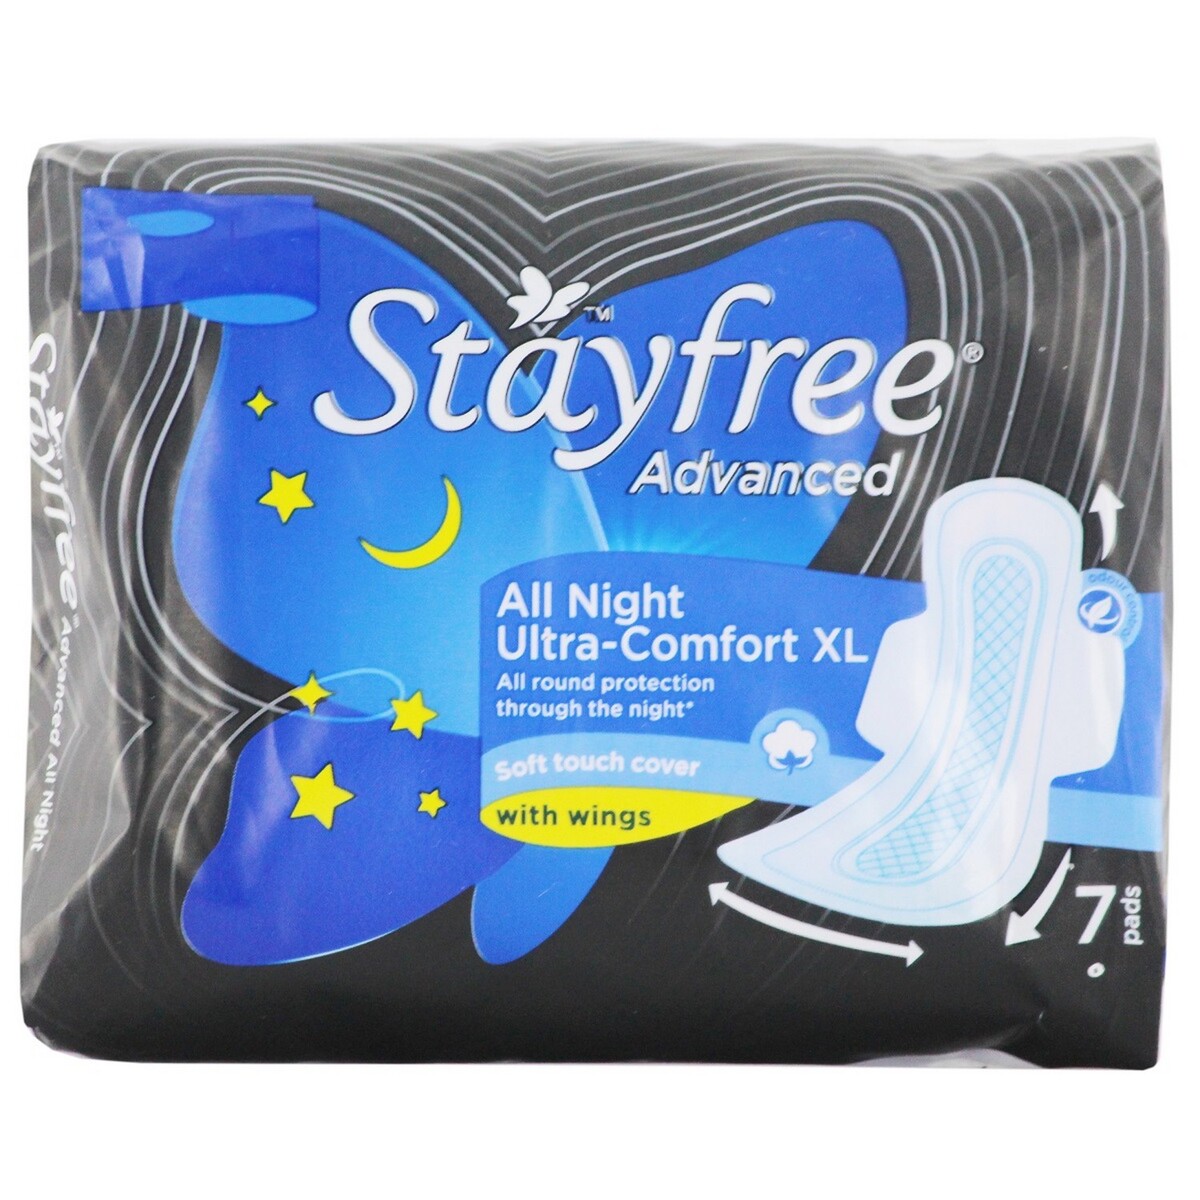 Stayfree Advance All Night 7's